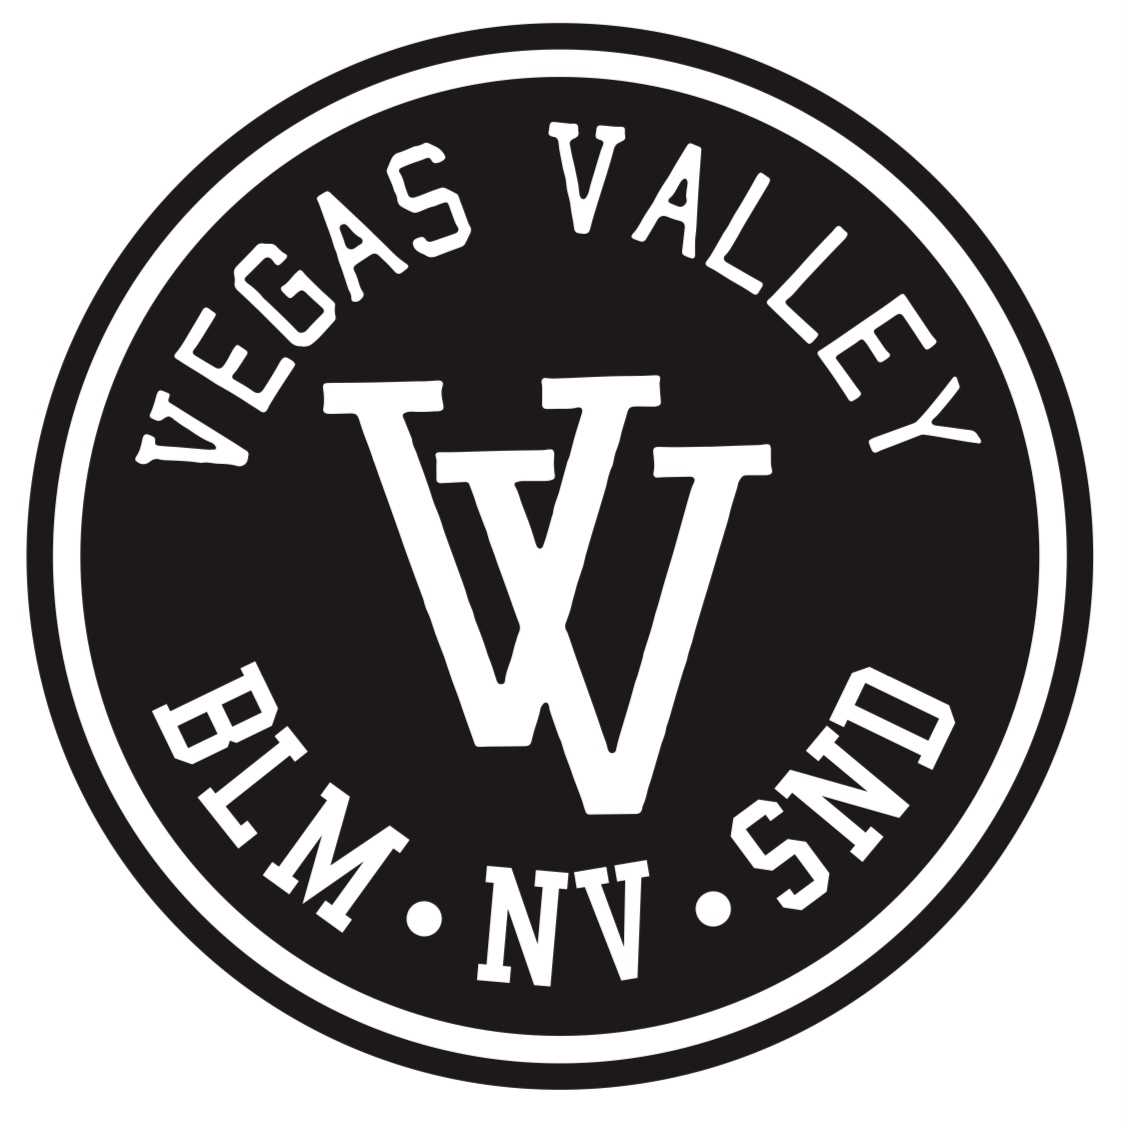 Vegas Valley Veterans Crew